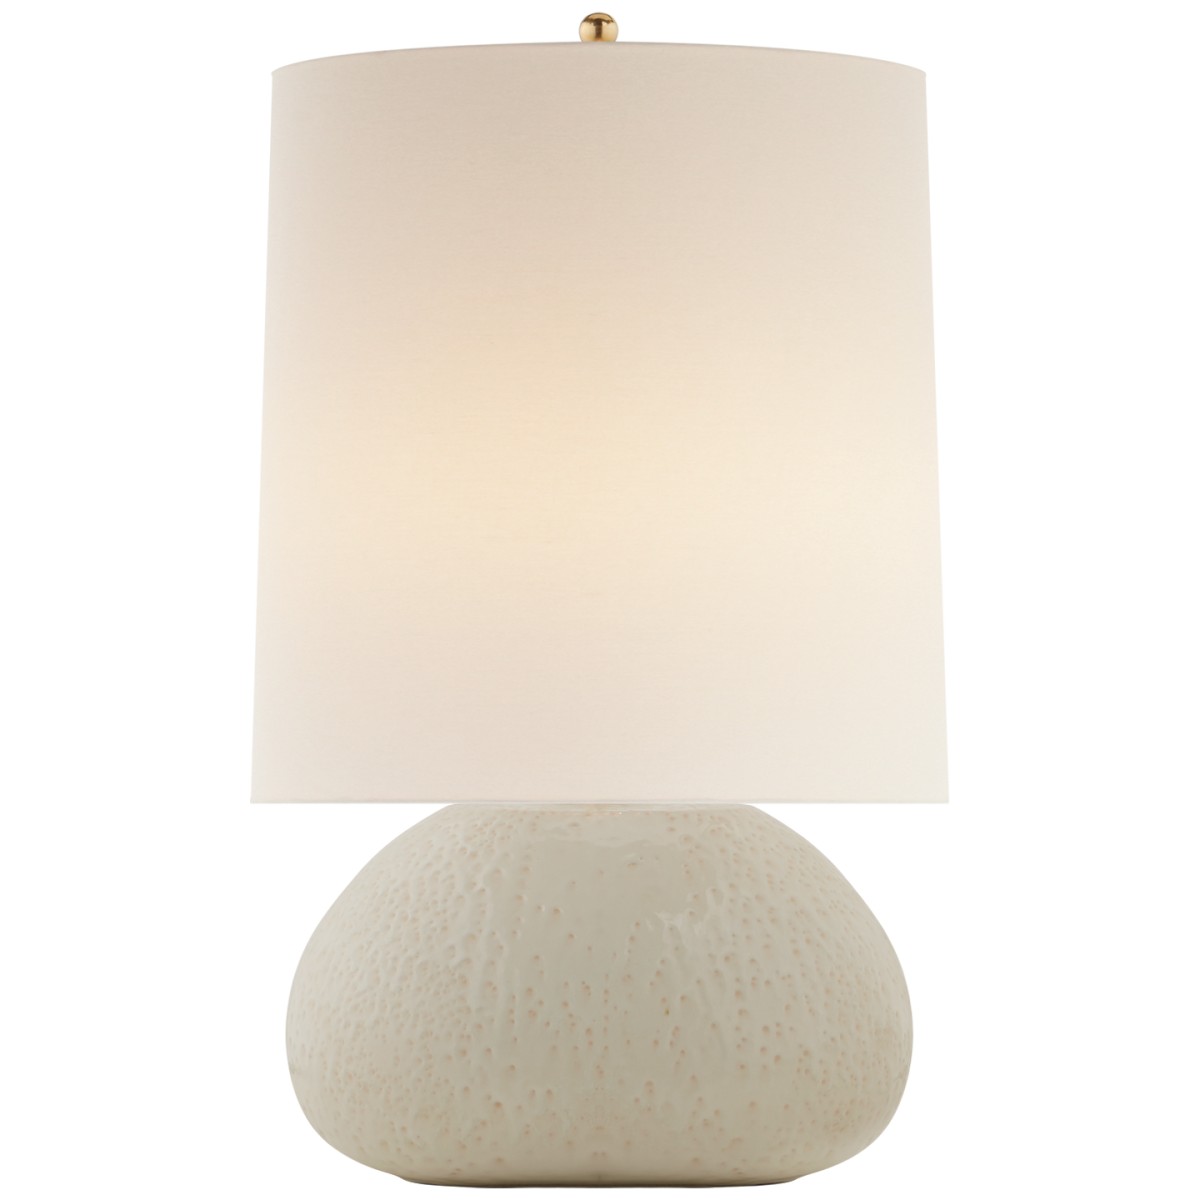 Sumava Medium Table Lamp With Linen Shade